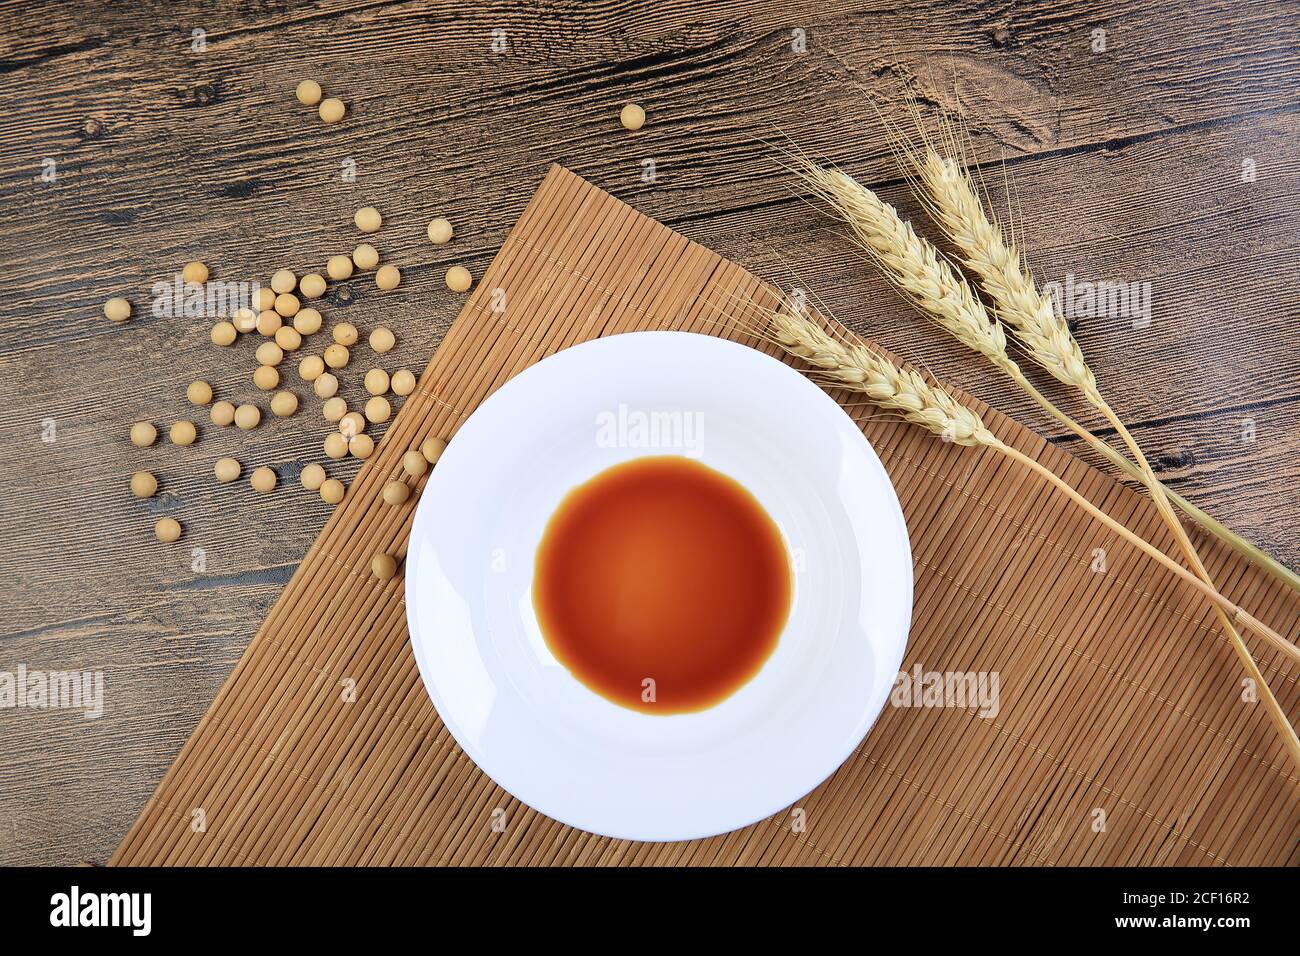 Wood grain, soy sauce, plate, wheat ears Stock Photo